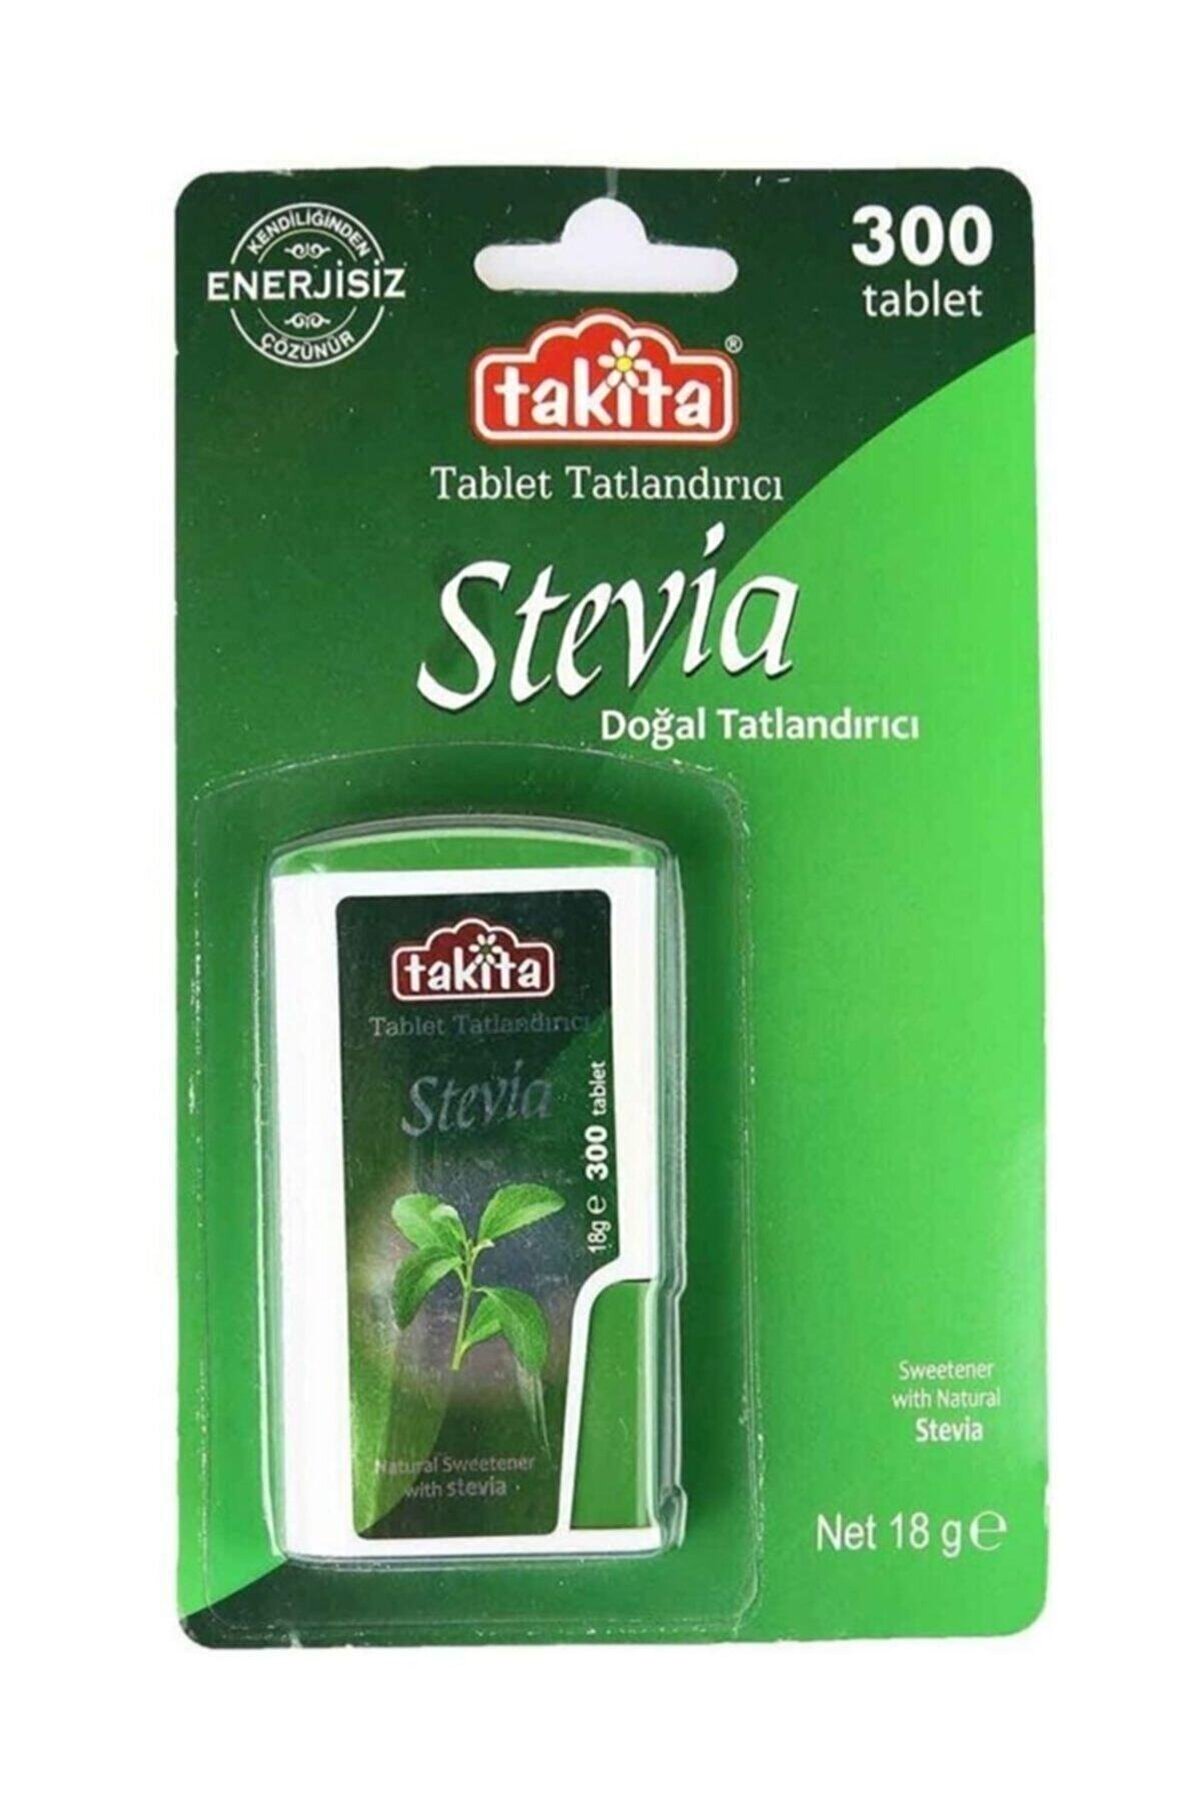 Takita Stevia Tablet Tatlandirici 300 Tablet